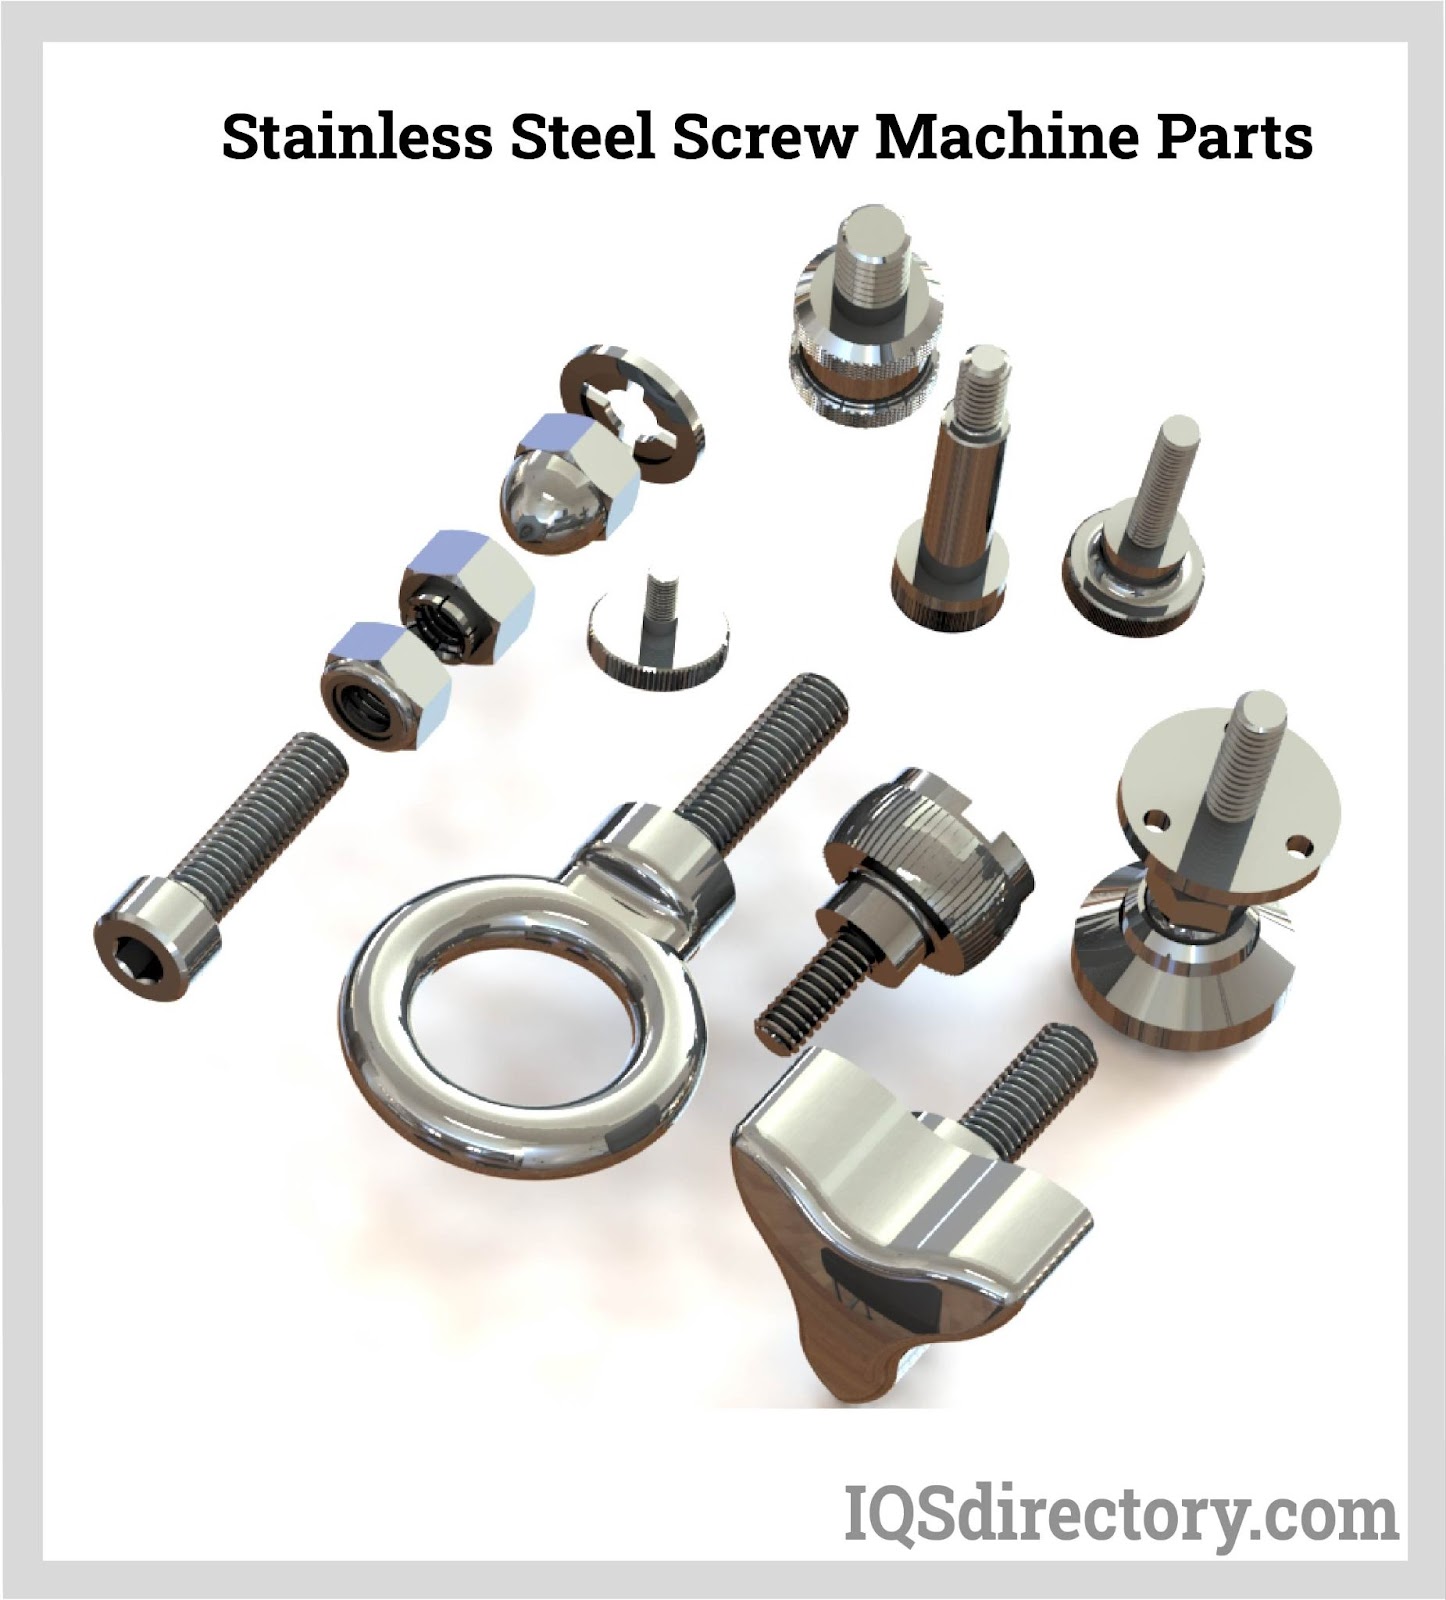 Stainless Steel Screw Machine Parts